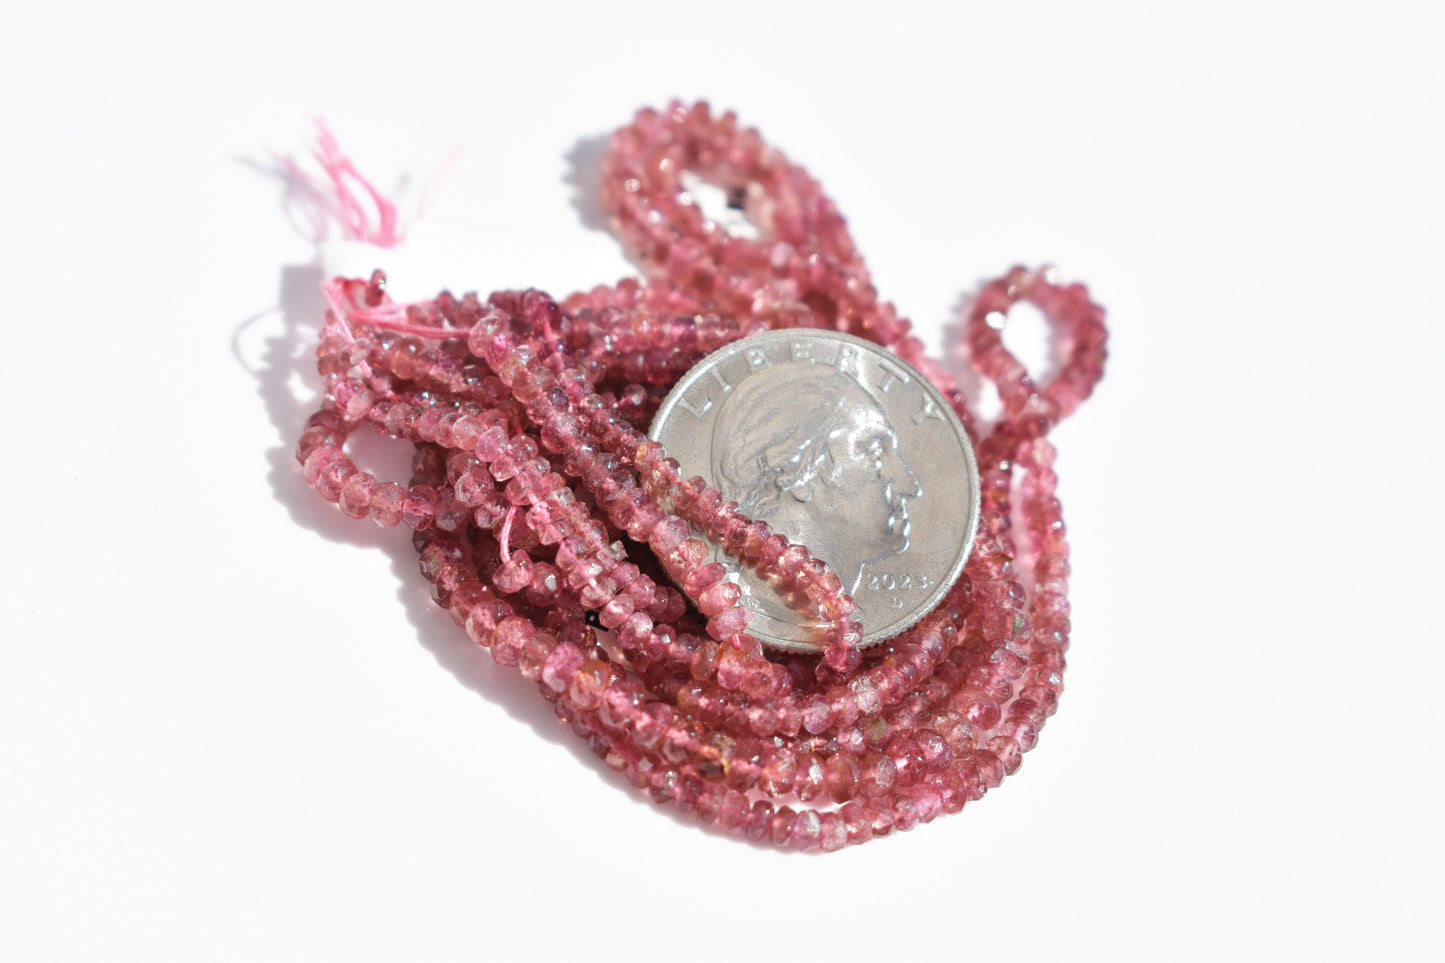 Pink Tourmaline Graduated Rondelle Beads 2-3mm